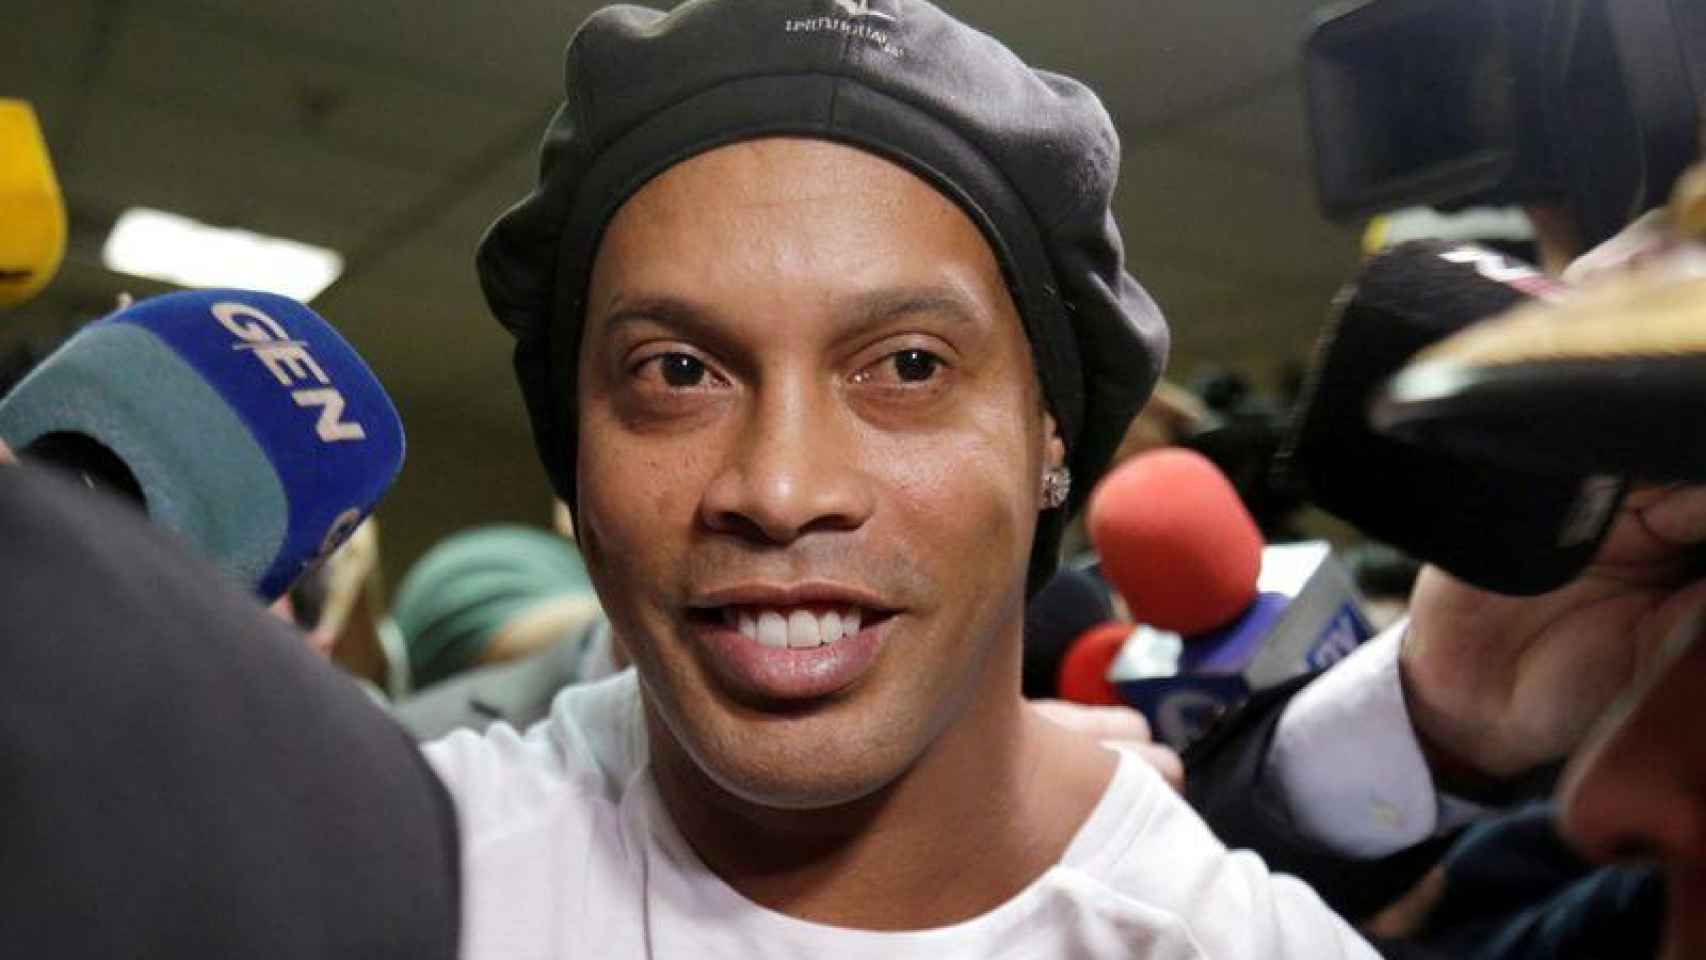 El exfutbolista brasileño Ronaldinho